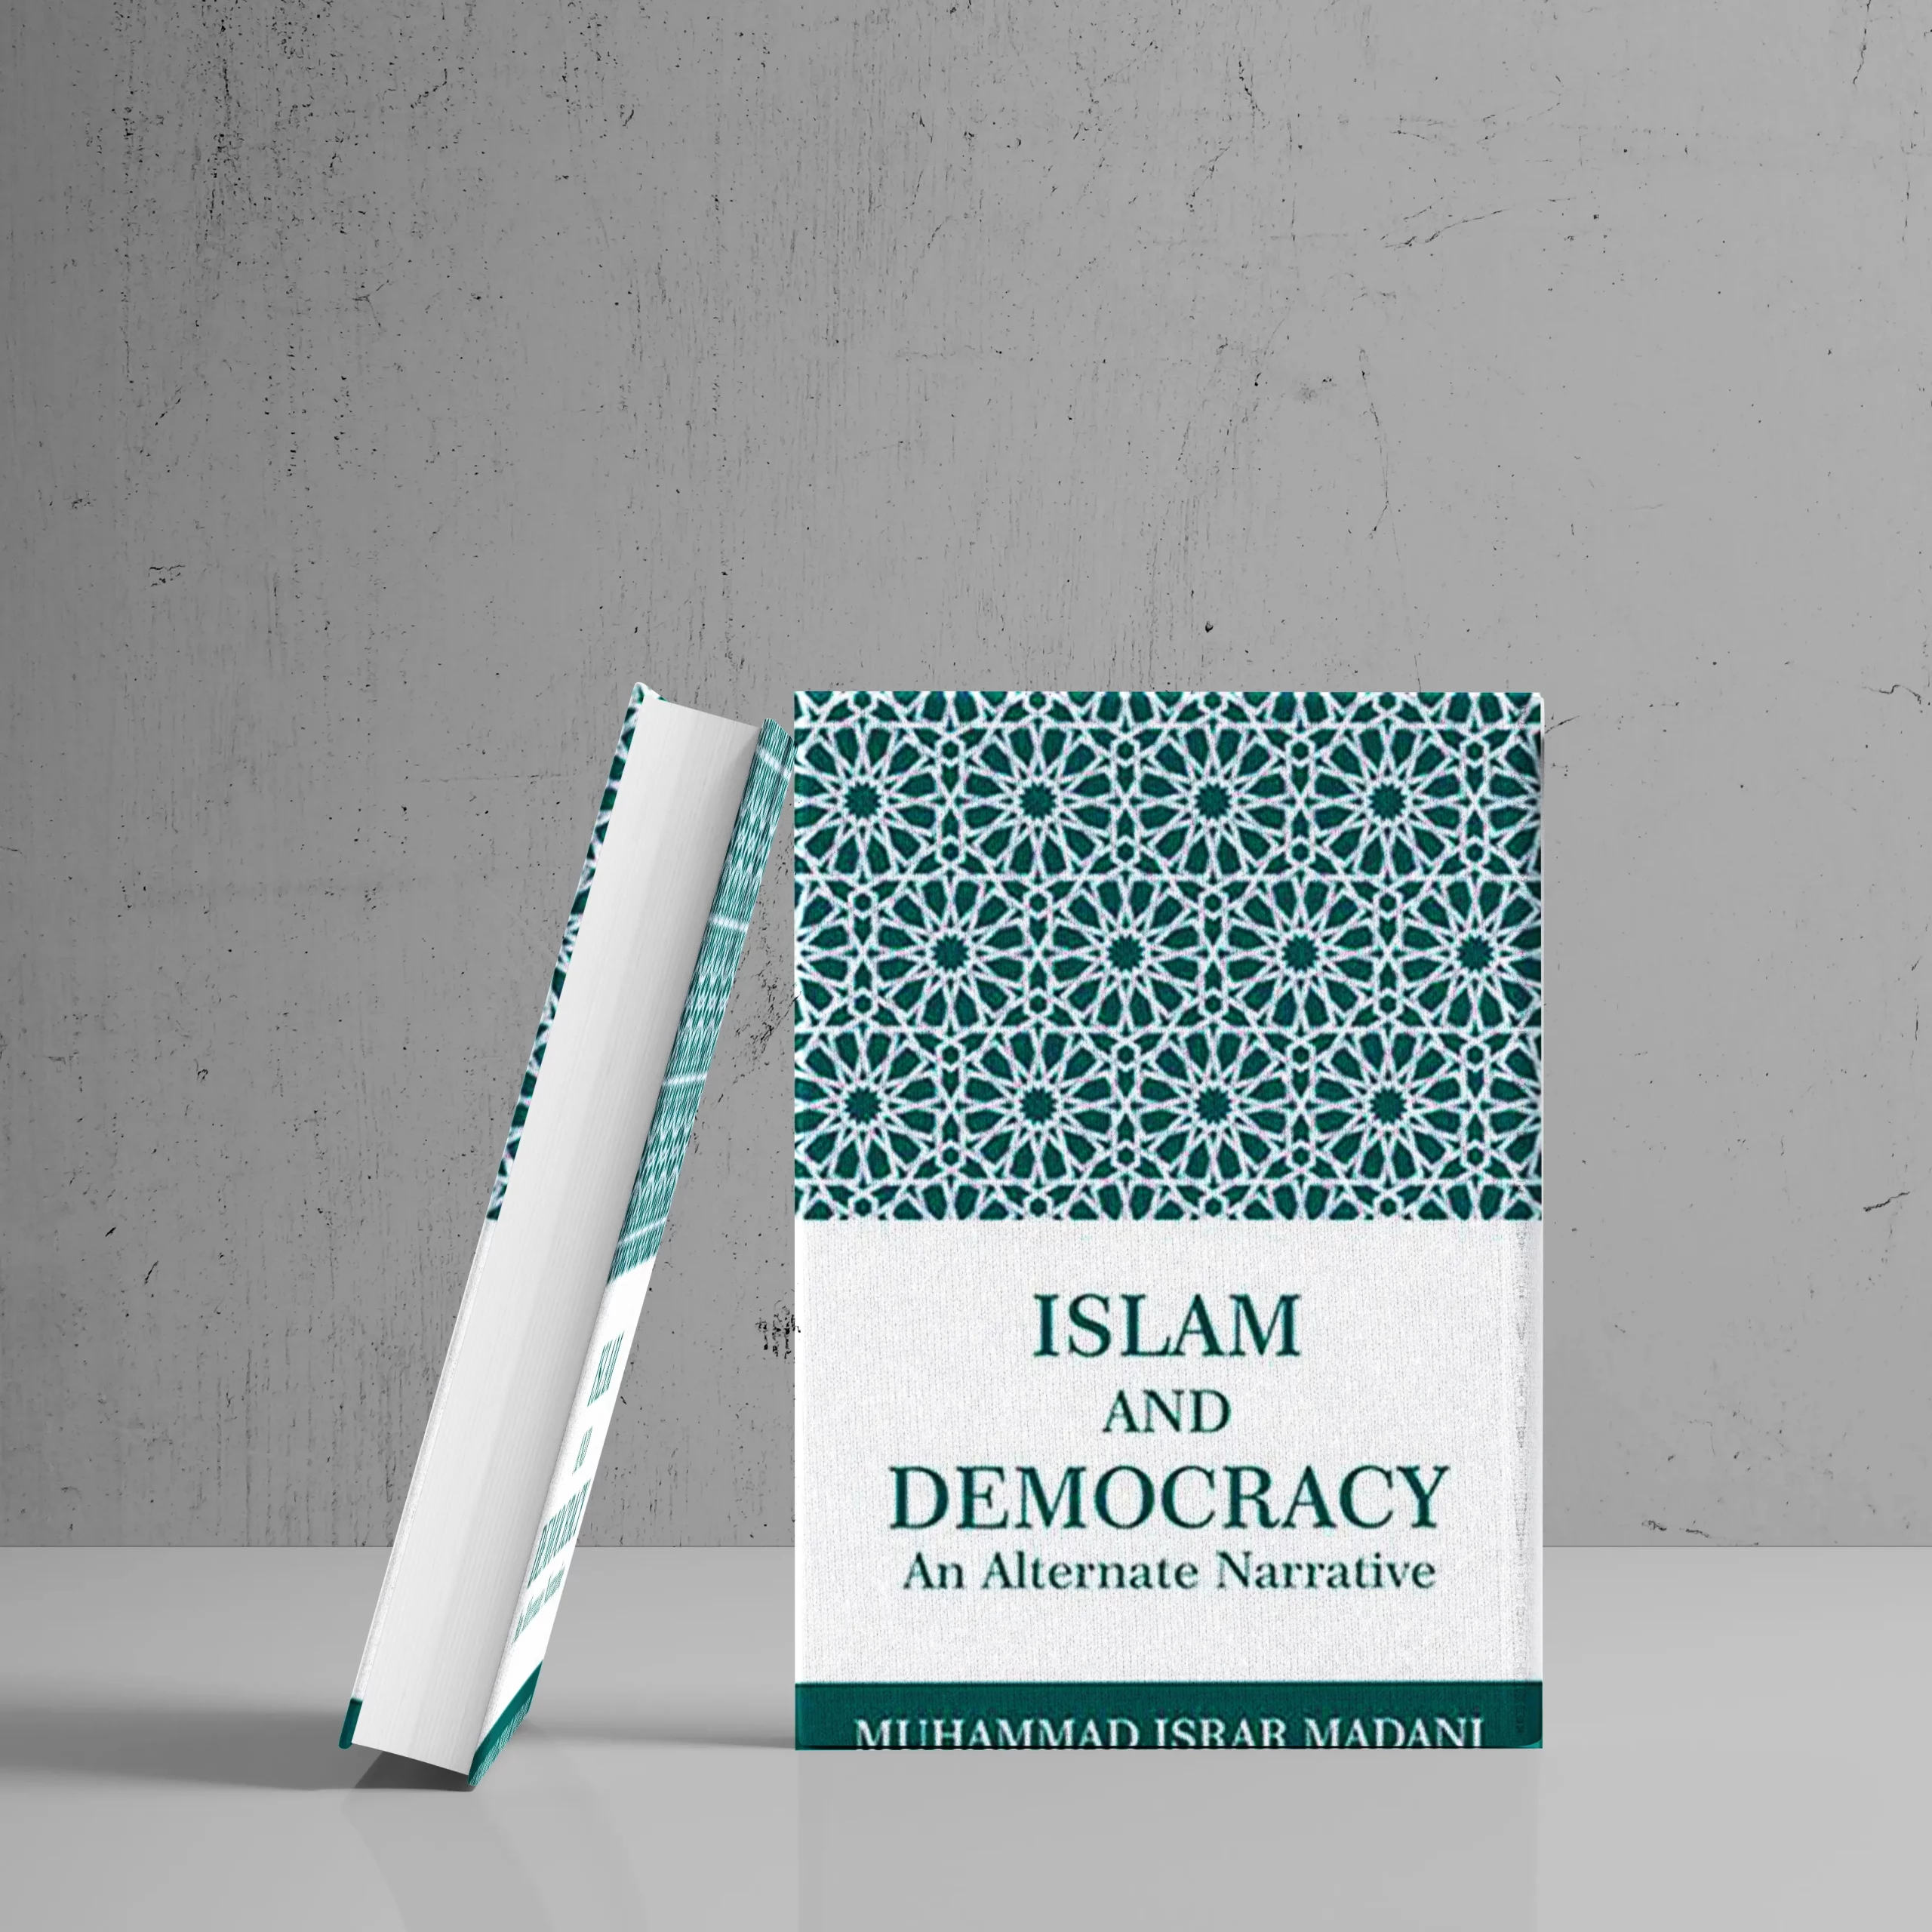 Islam And Democracy: An Alternative Narrative